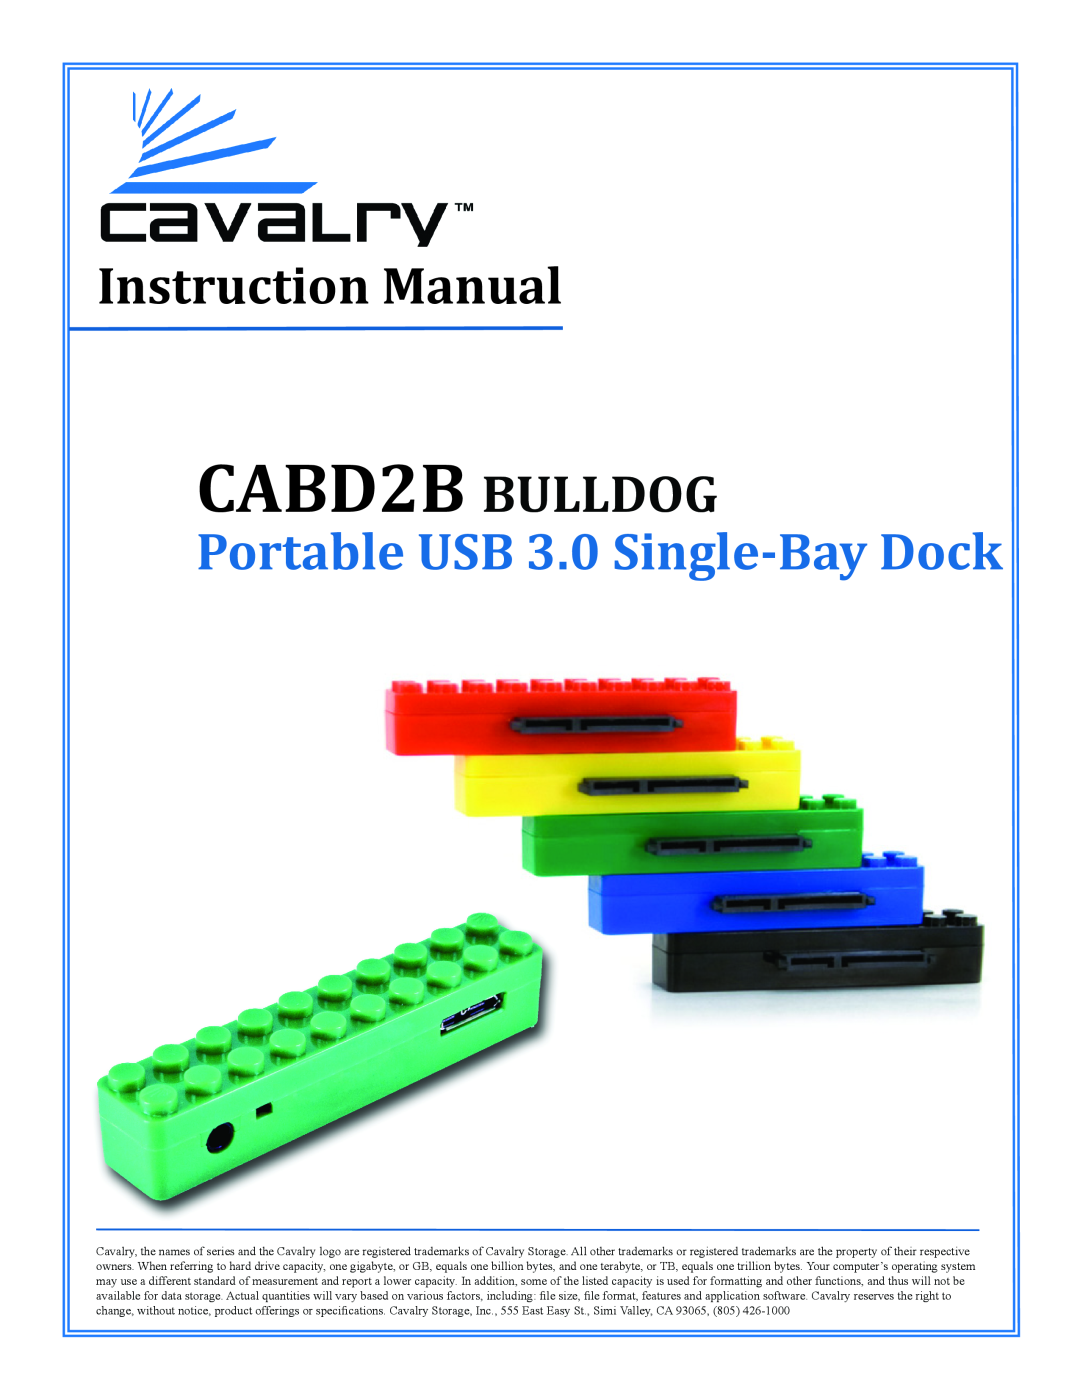 Cavalry Storage instruction manual CABD2B BULLDOG, Portable USB 3.0 Single-BayDock 